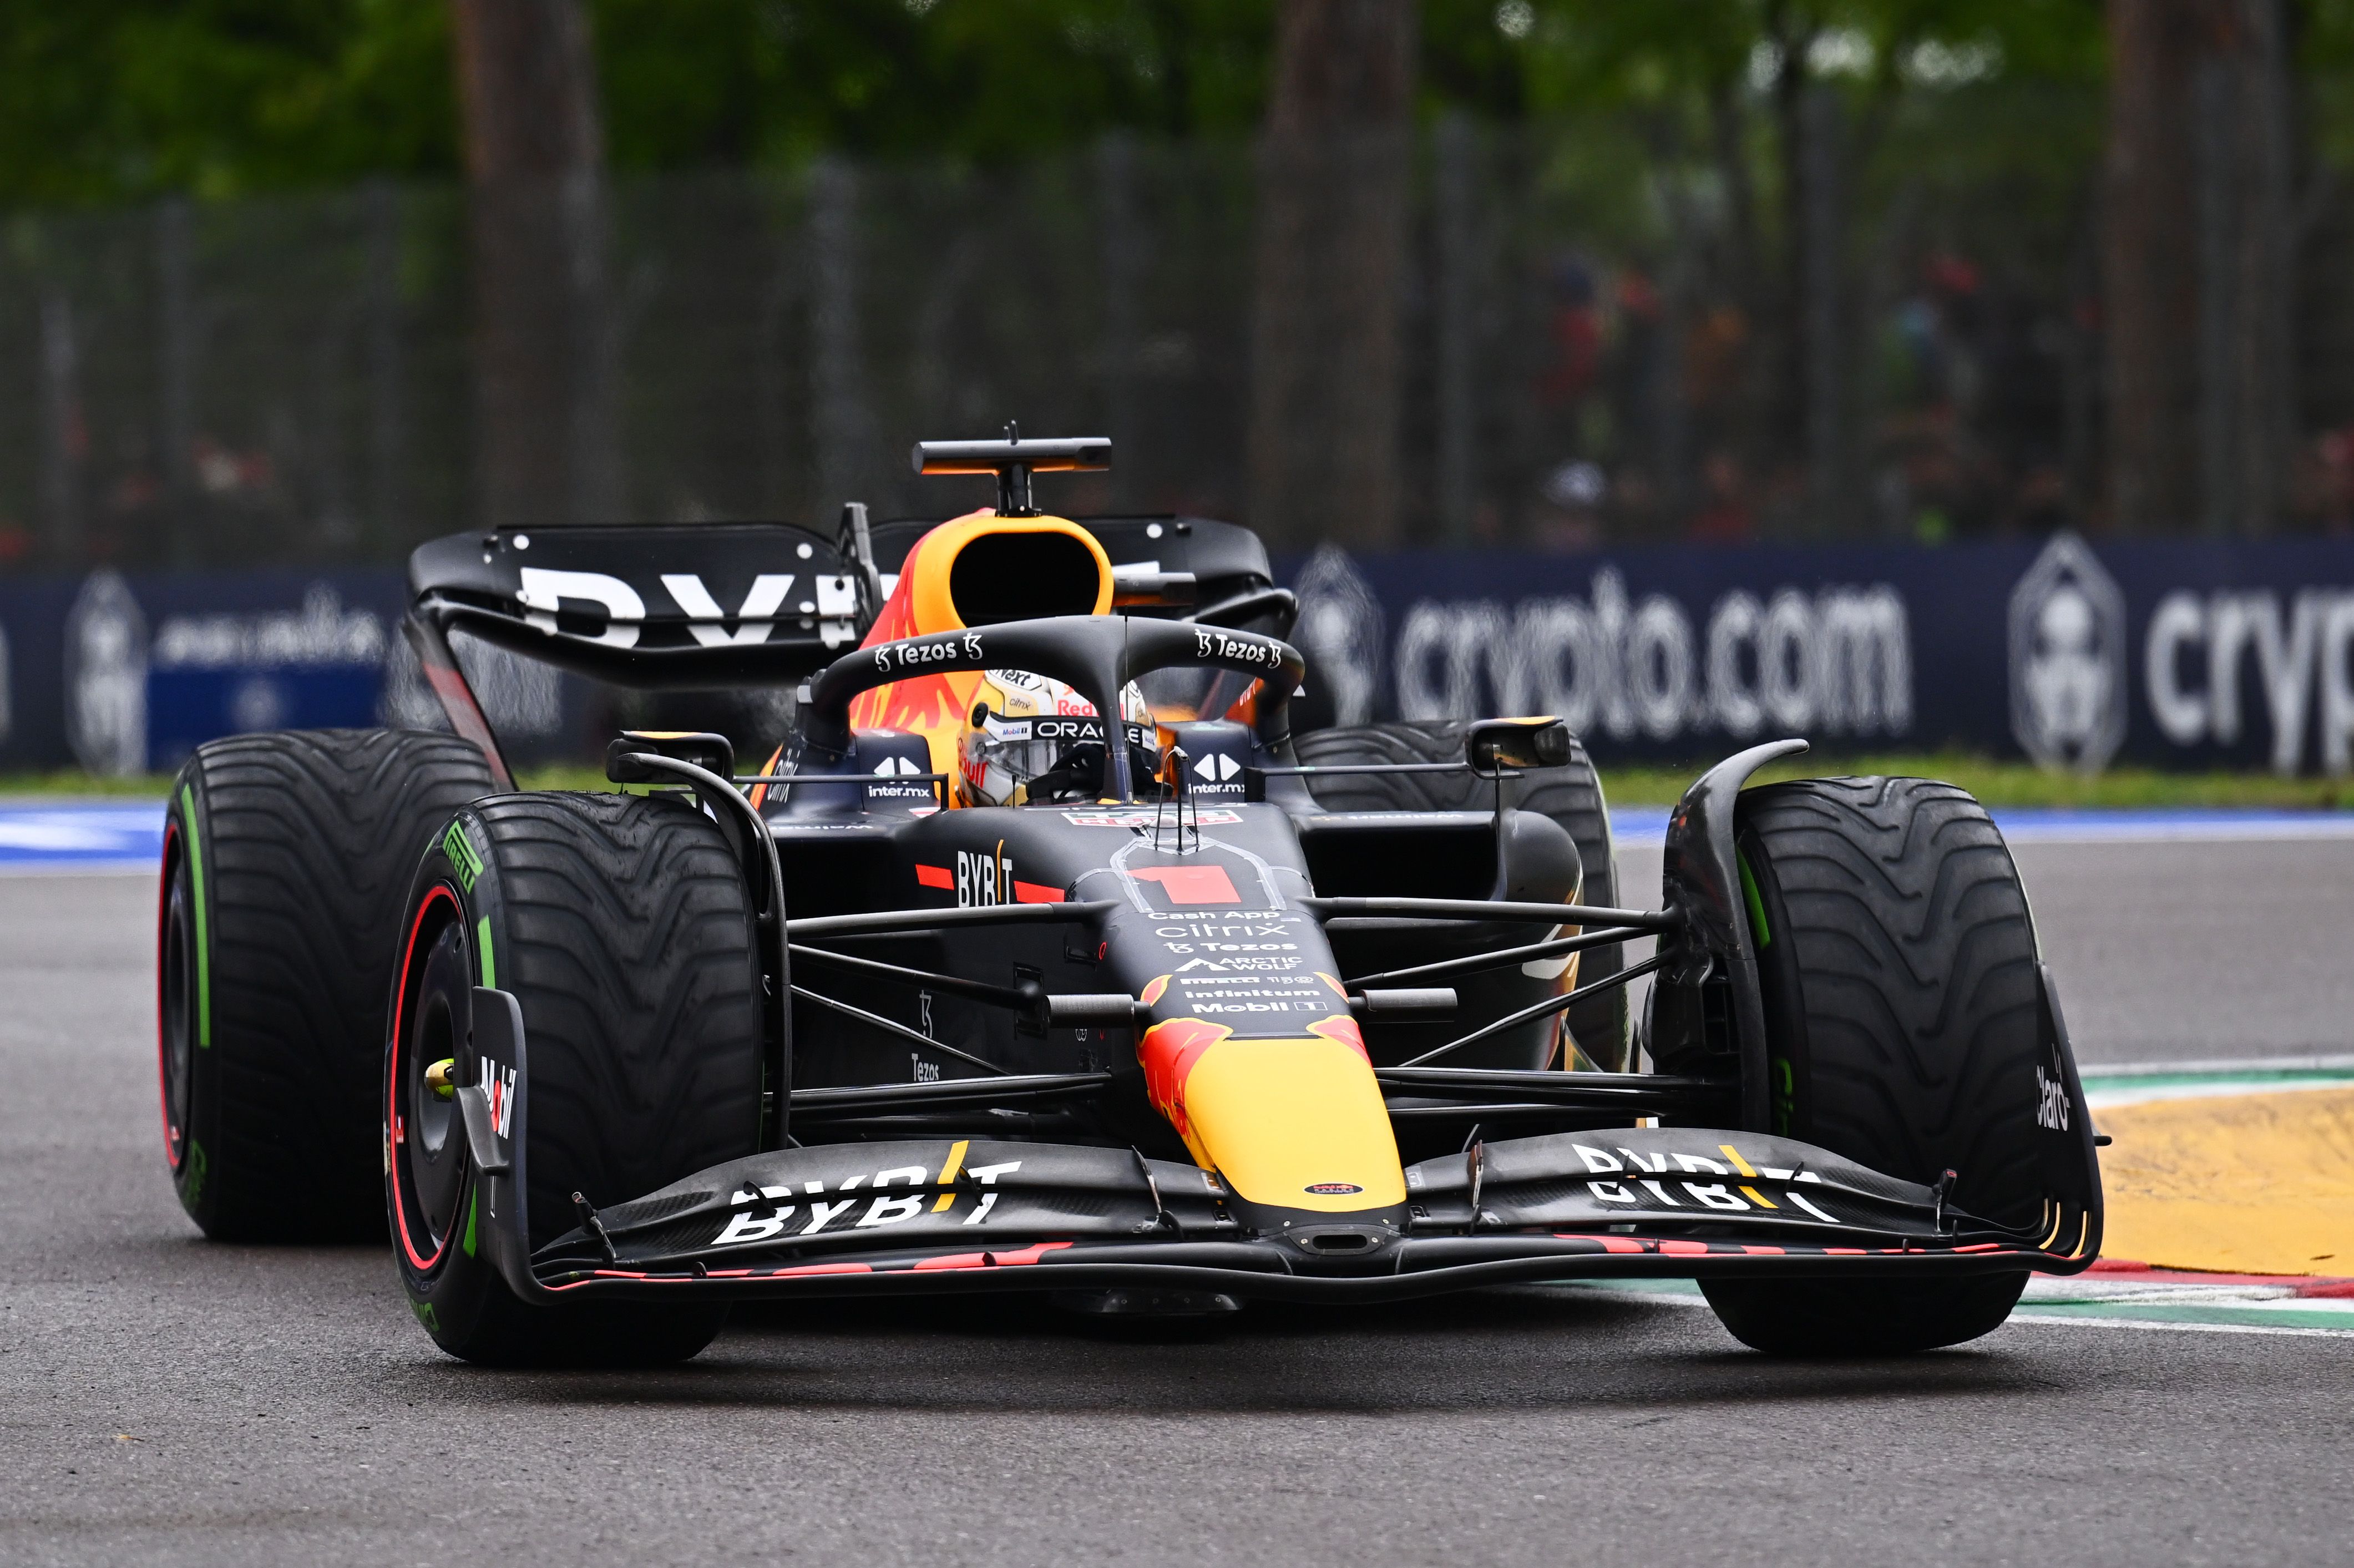 Rubriek viel Efficiënt Max Verstappen Caps Perfect Weekend at F1 Emilia Romagna Grand Prix